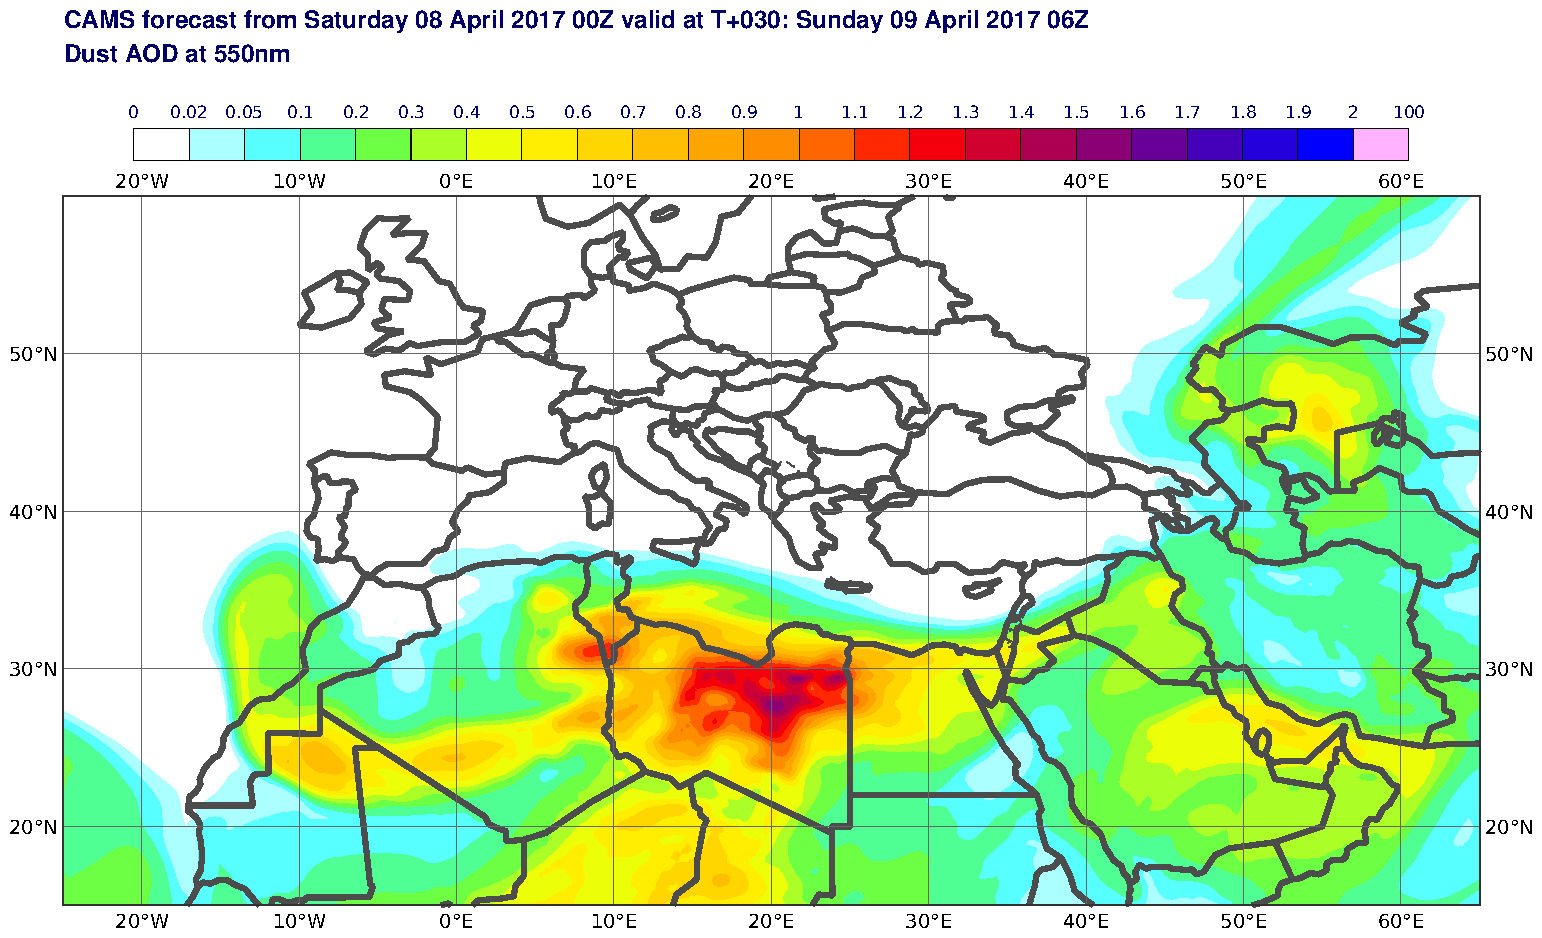 Dust AOD at 550nm valid at T30 - 2017-04-09 06:00